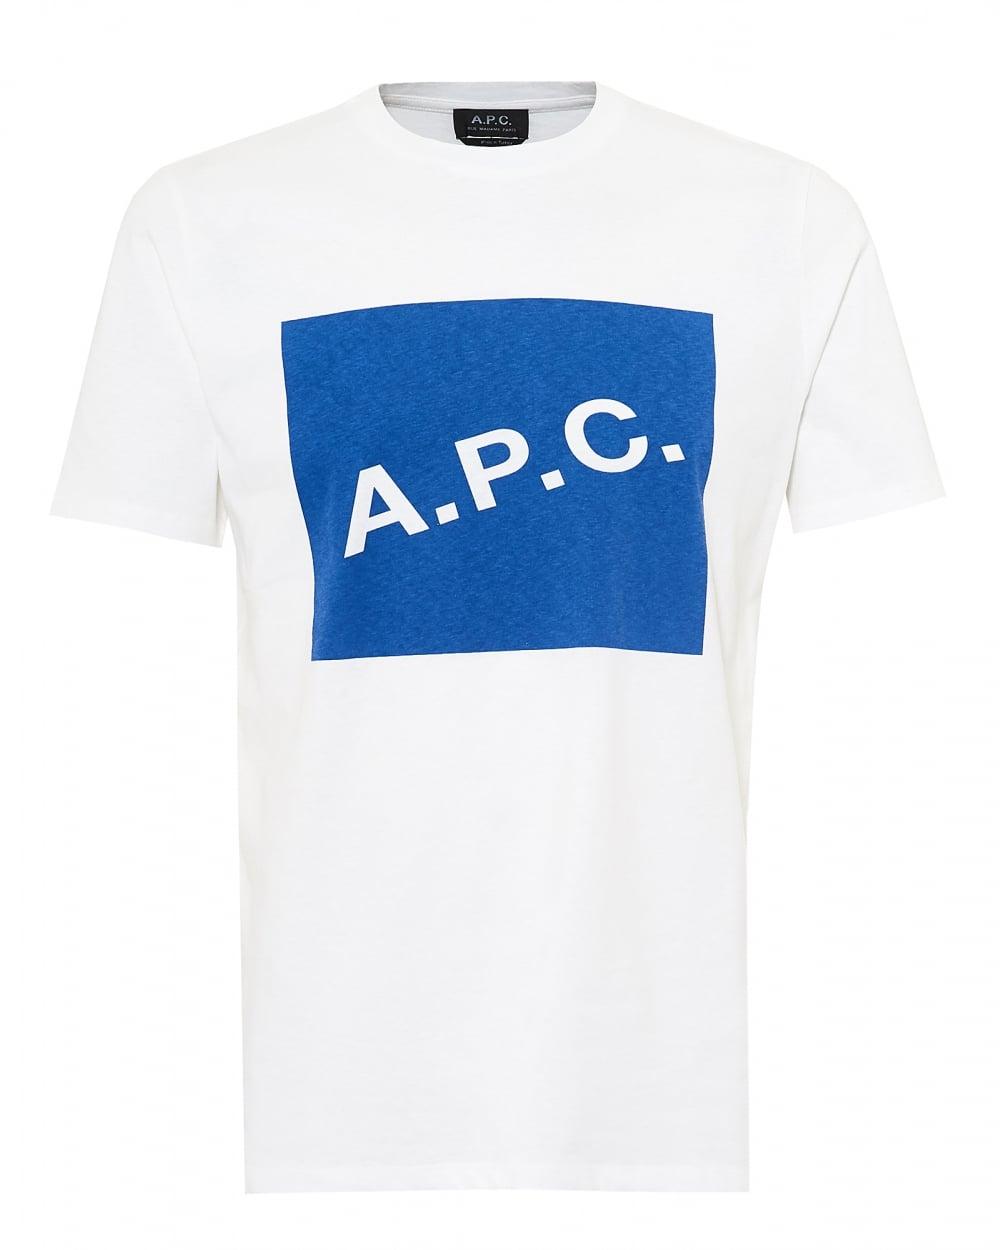 Blue and White Box Logo - A.P.C. Mens Kraft T Shirt, A.P.C. Box Logo White Tee